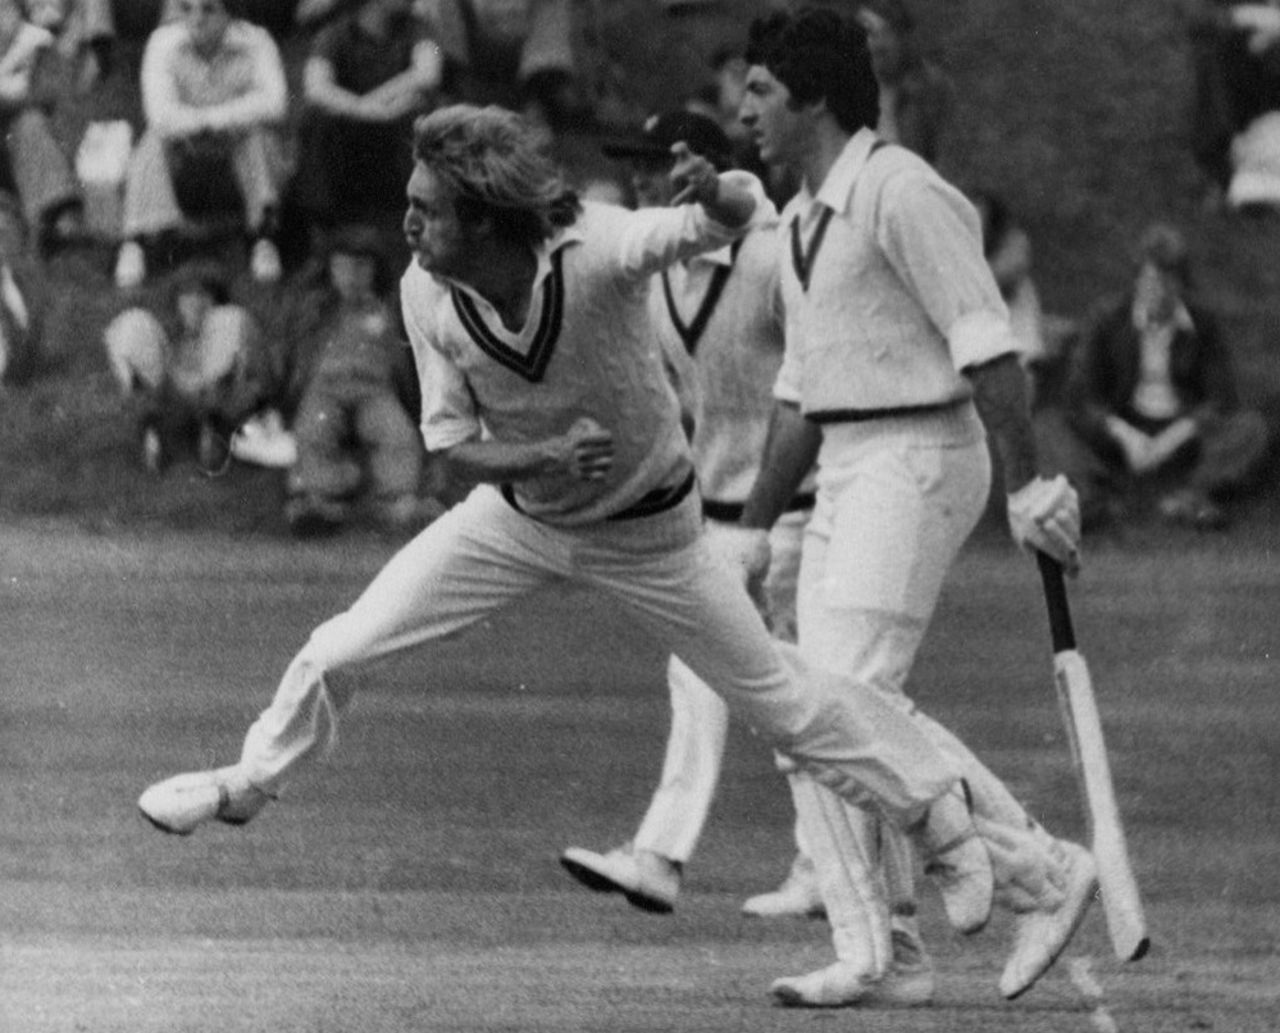 Stuart Wilkinson bowls, with non-striker Craig Serjeant looking on, Minor Counties v Australians, Sunderland, August 4, 1977